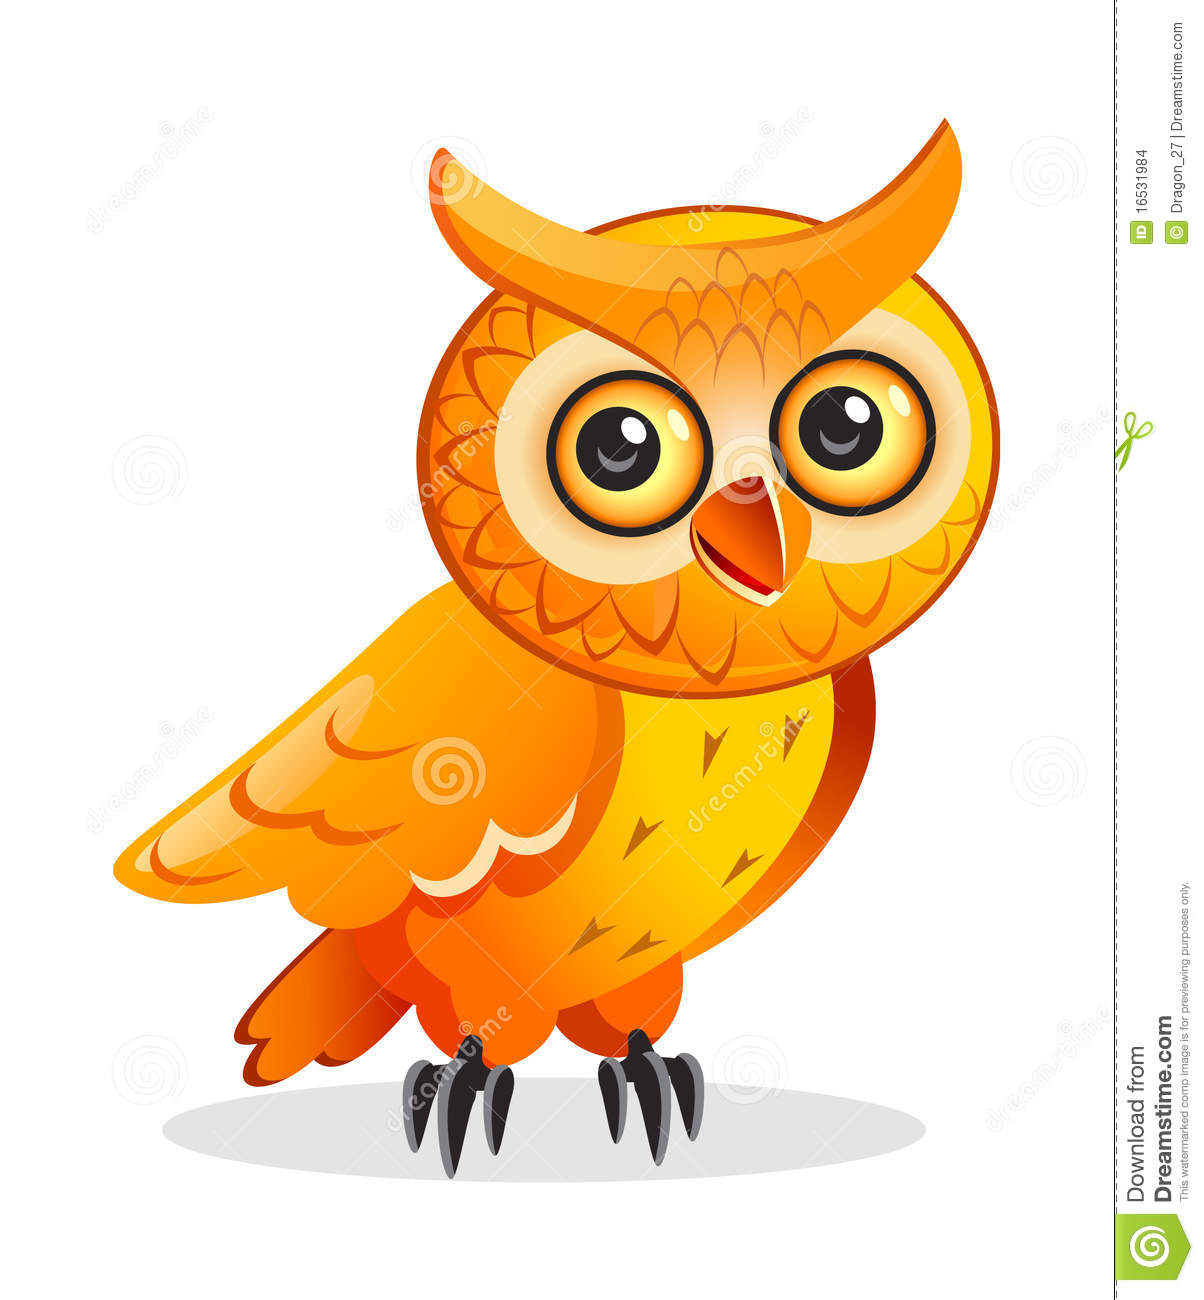 Owl Cartoon Image